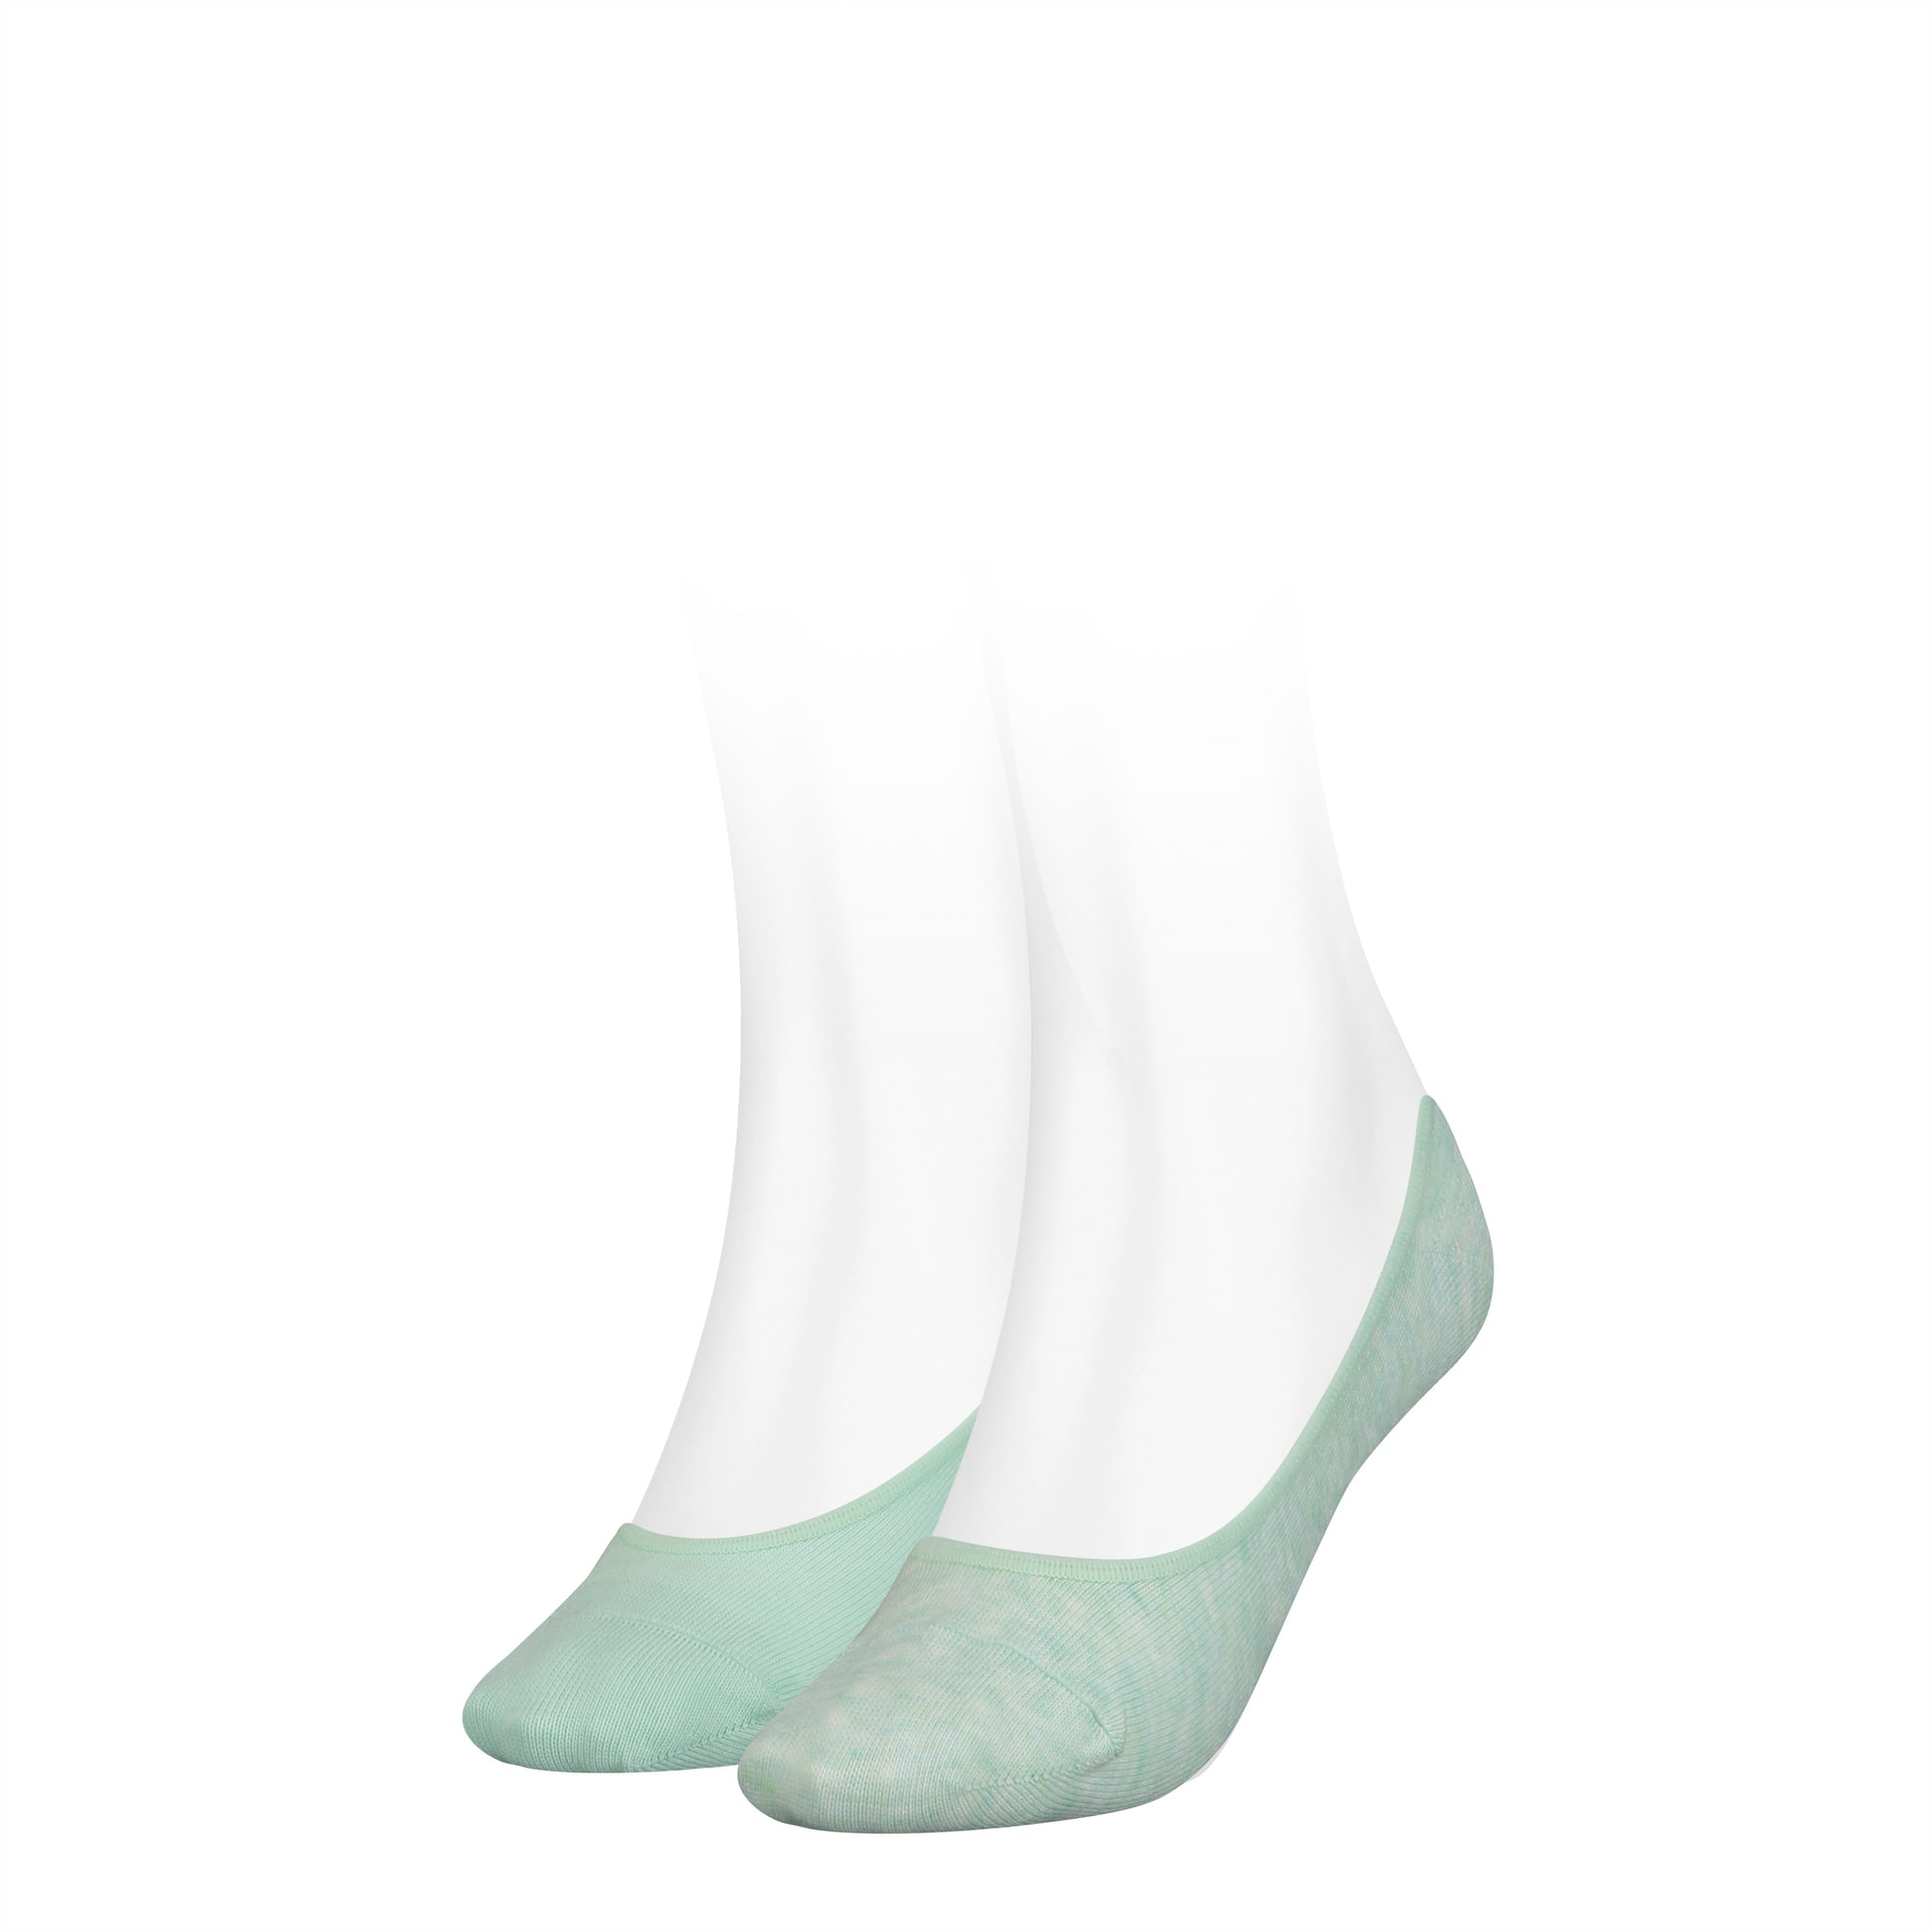 puma footie socks